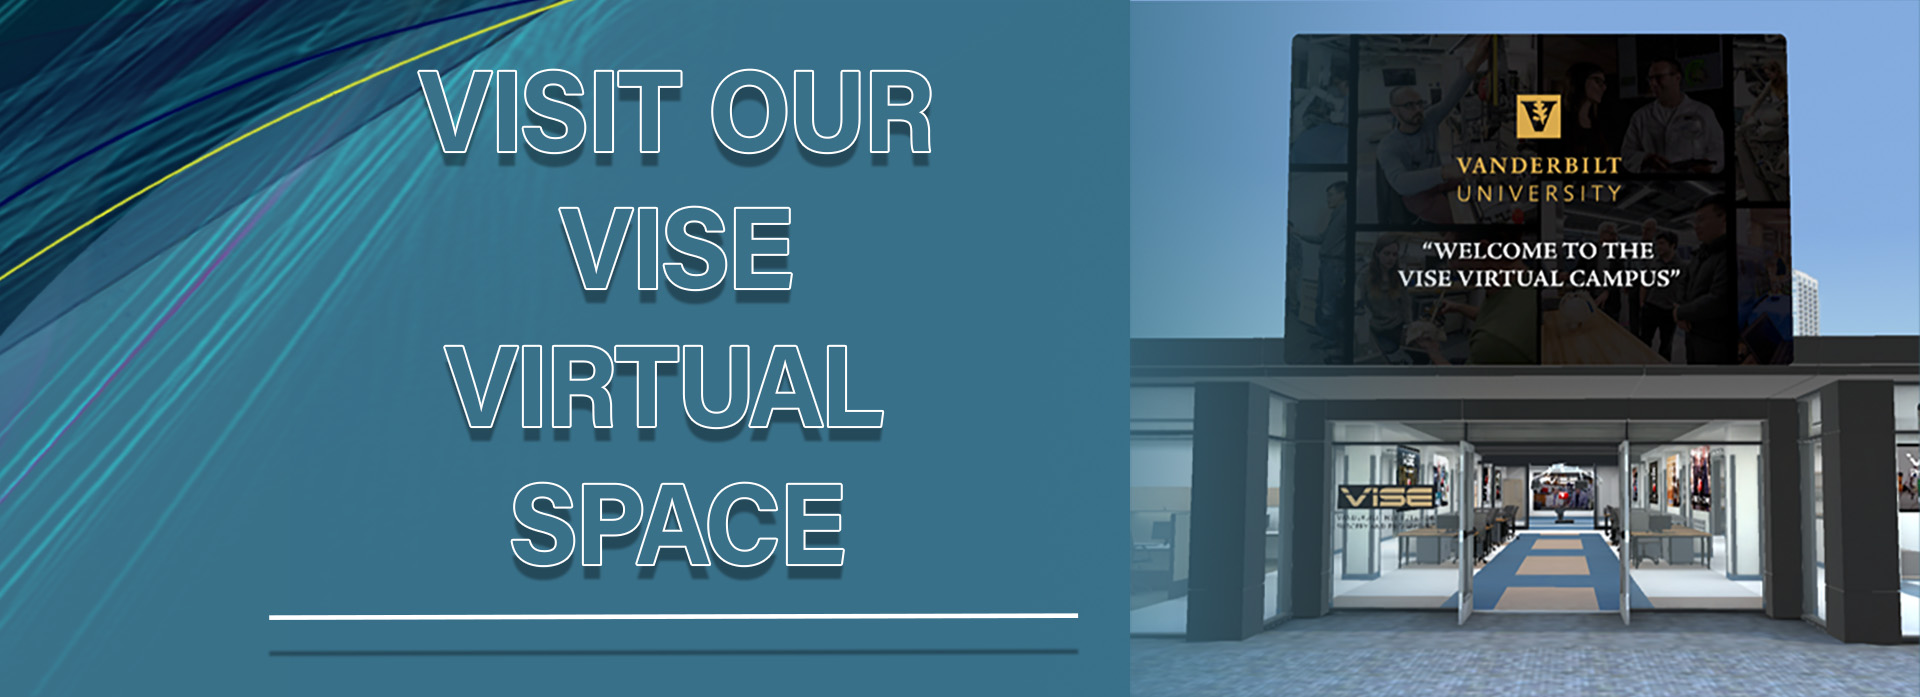 VISE Virtual Space